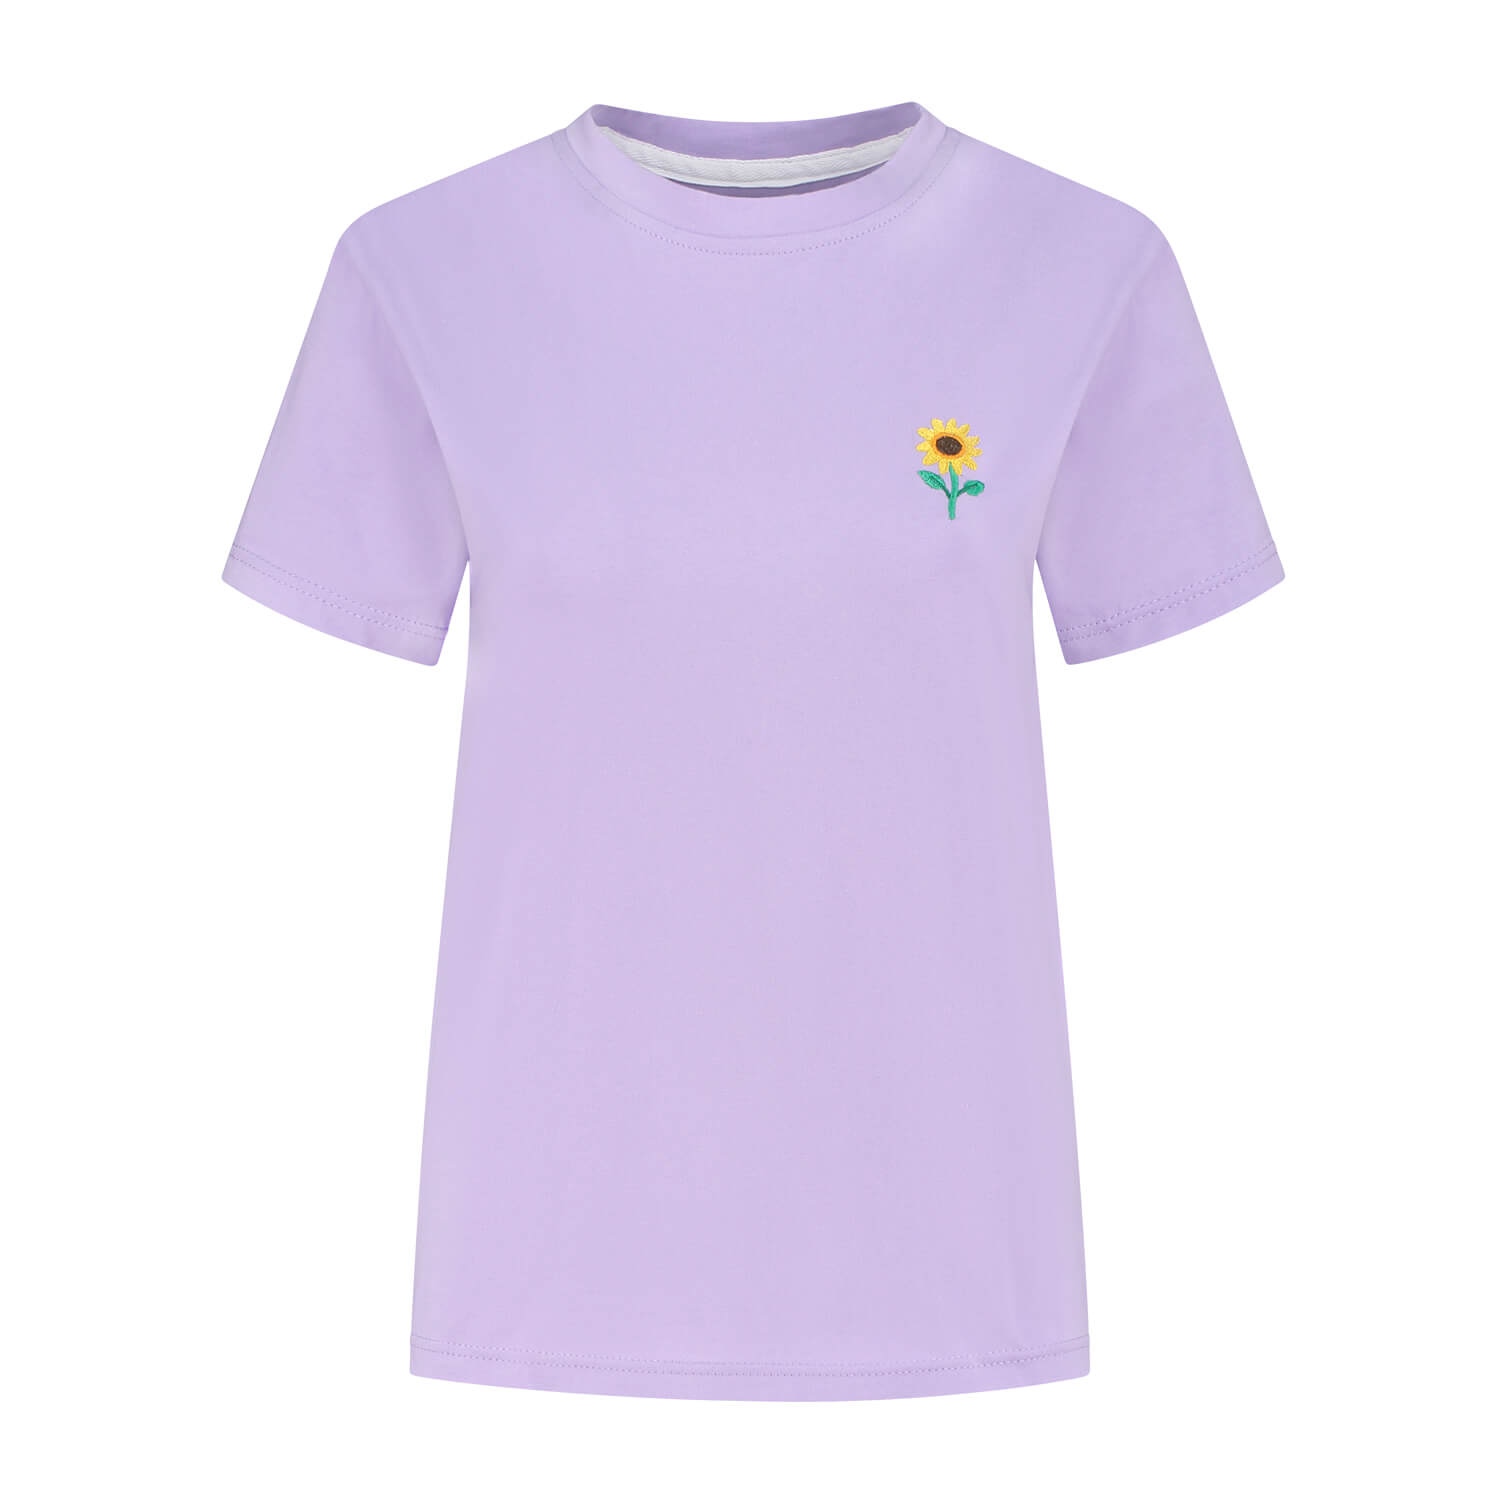 Women's organic t-shirt - purple